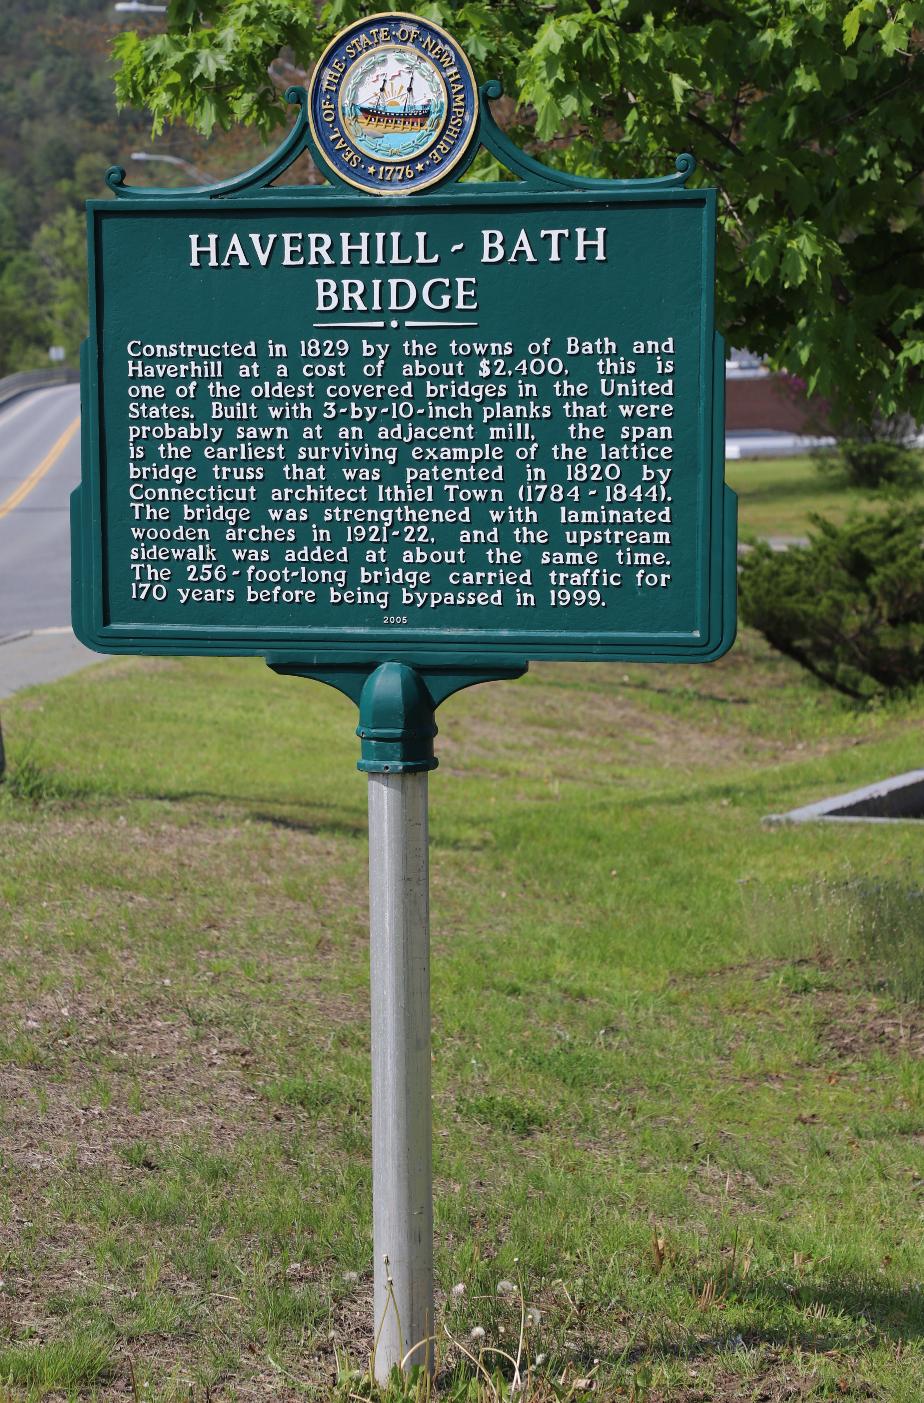 Haverhill-Bath Bridge Historical Marker # 190 Haverhill NH